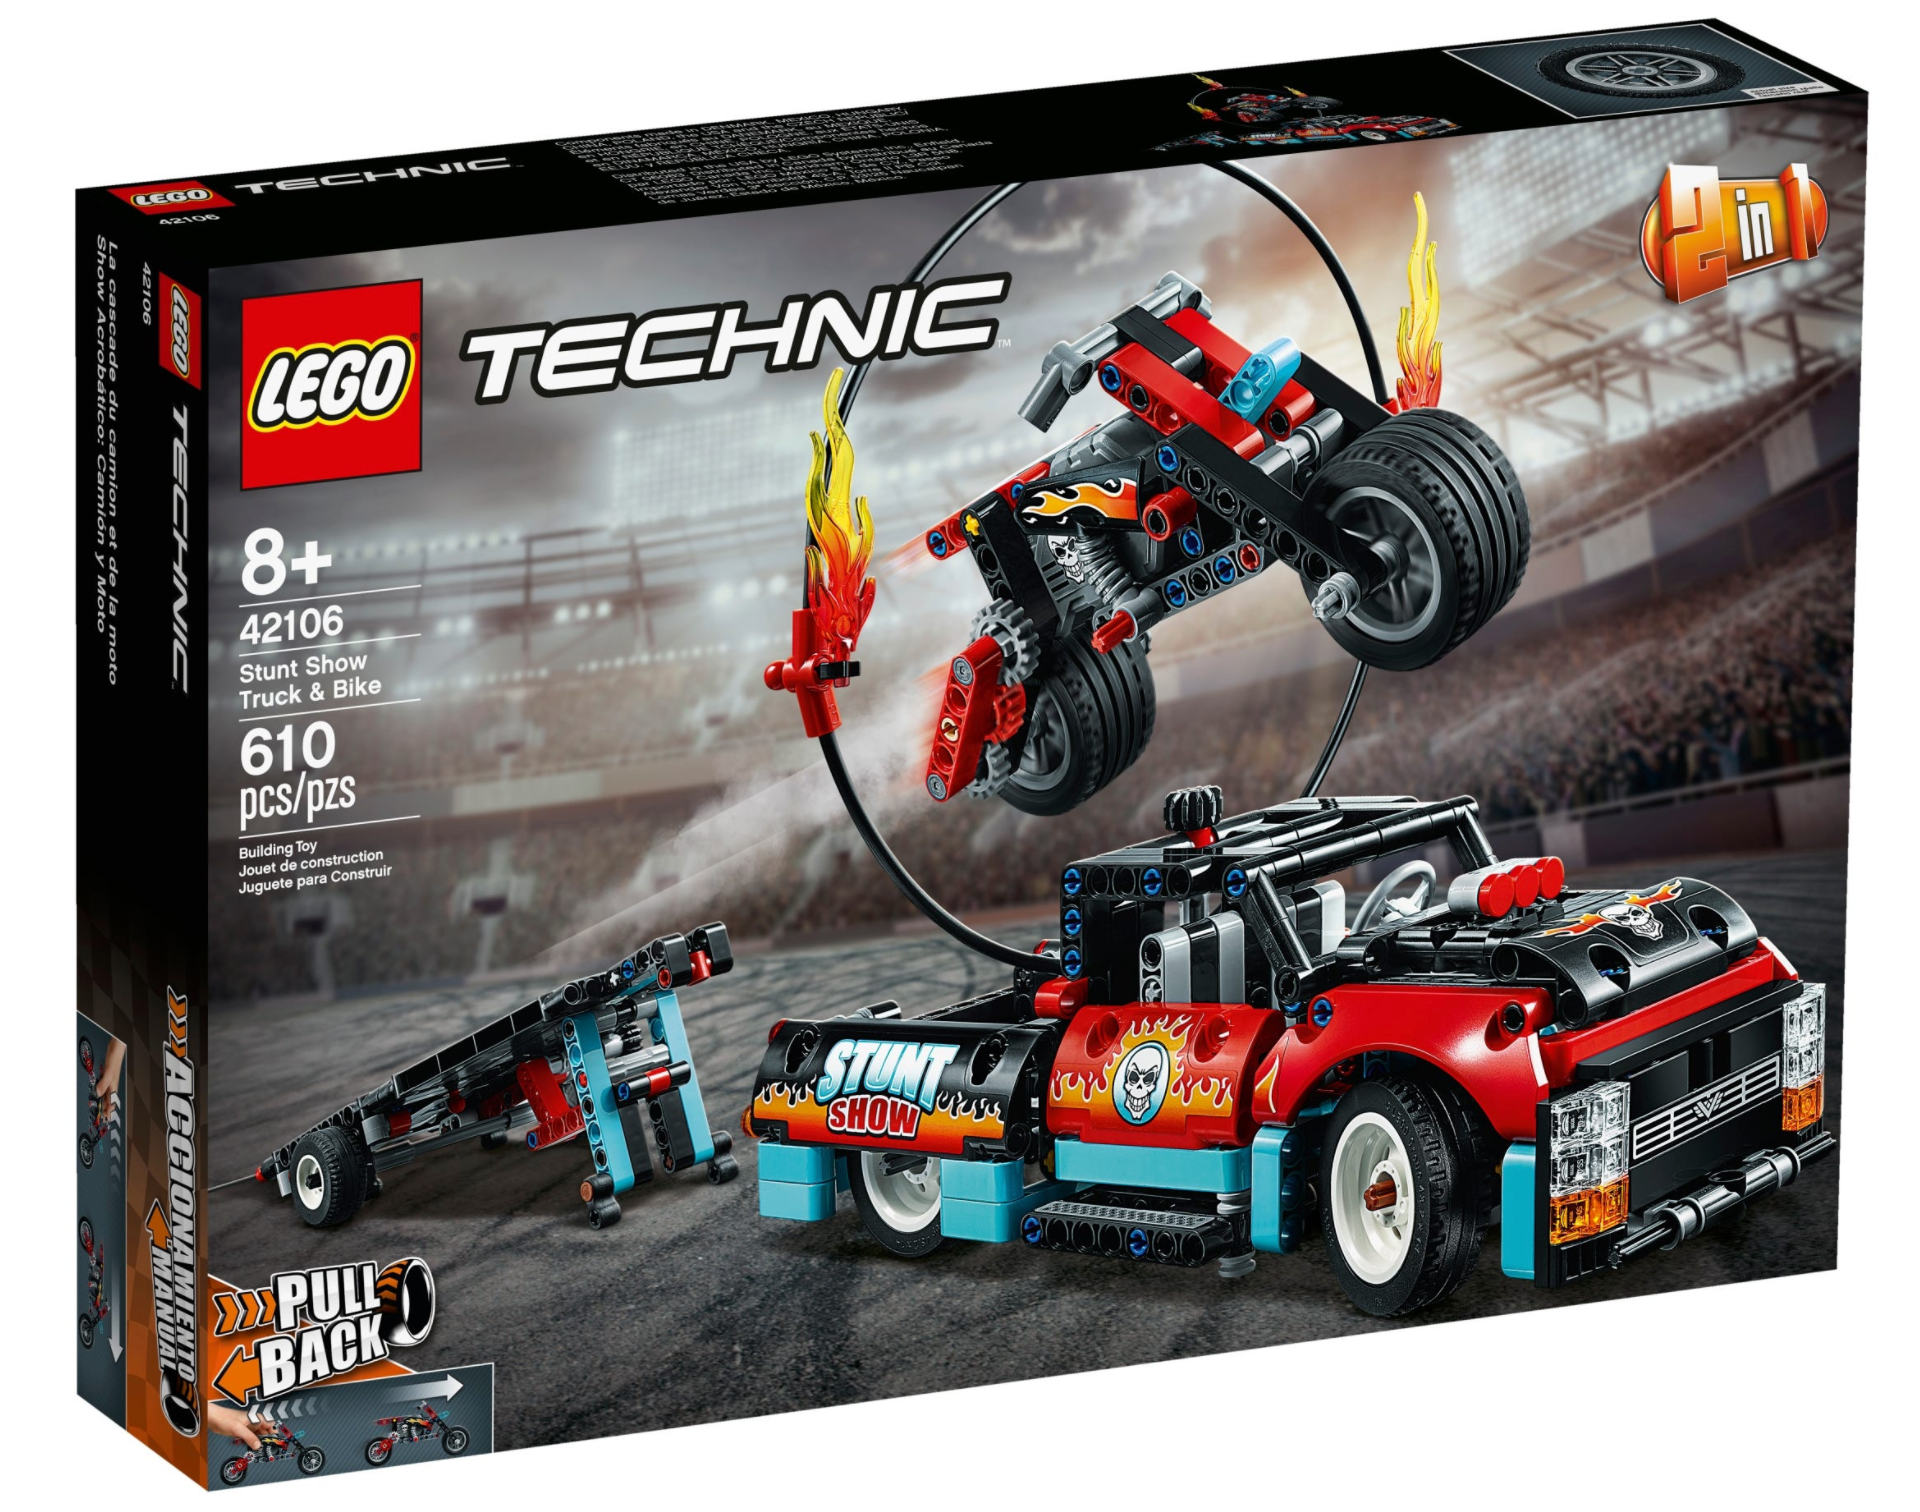 LEGO: Technic - Stunt Show Truck & Bike